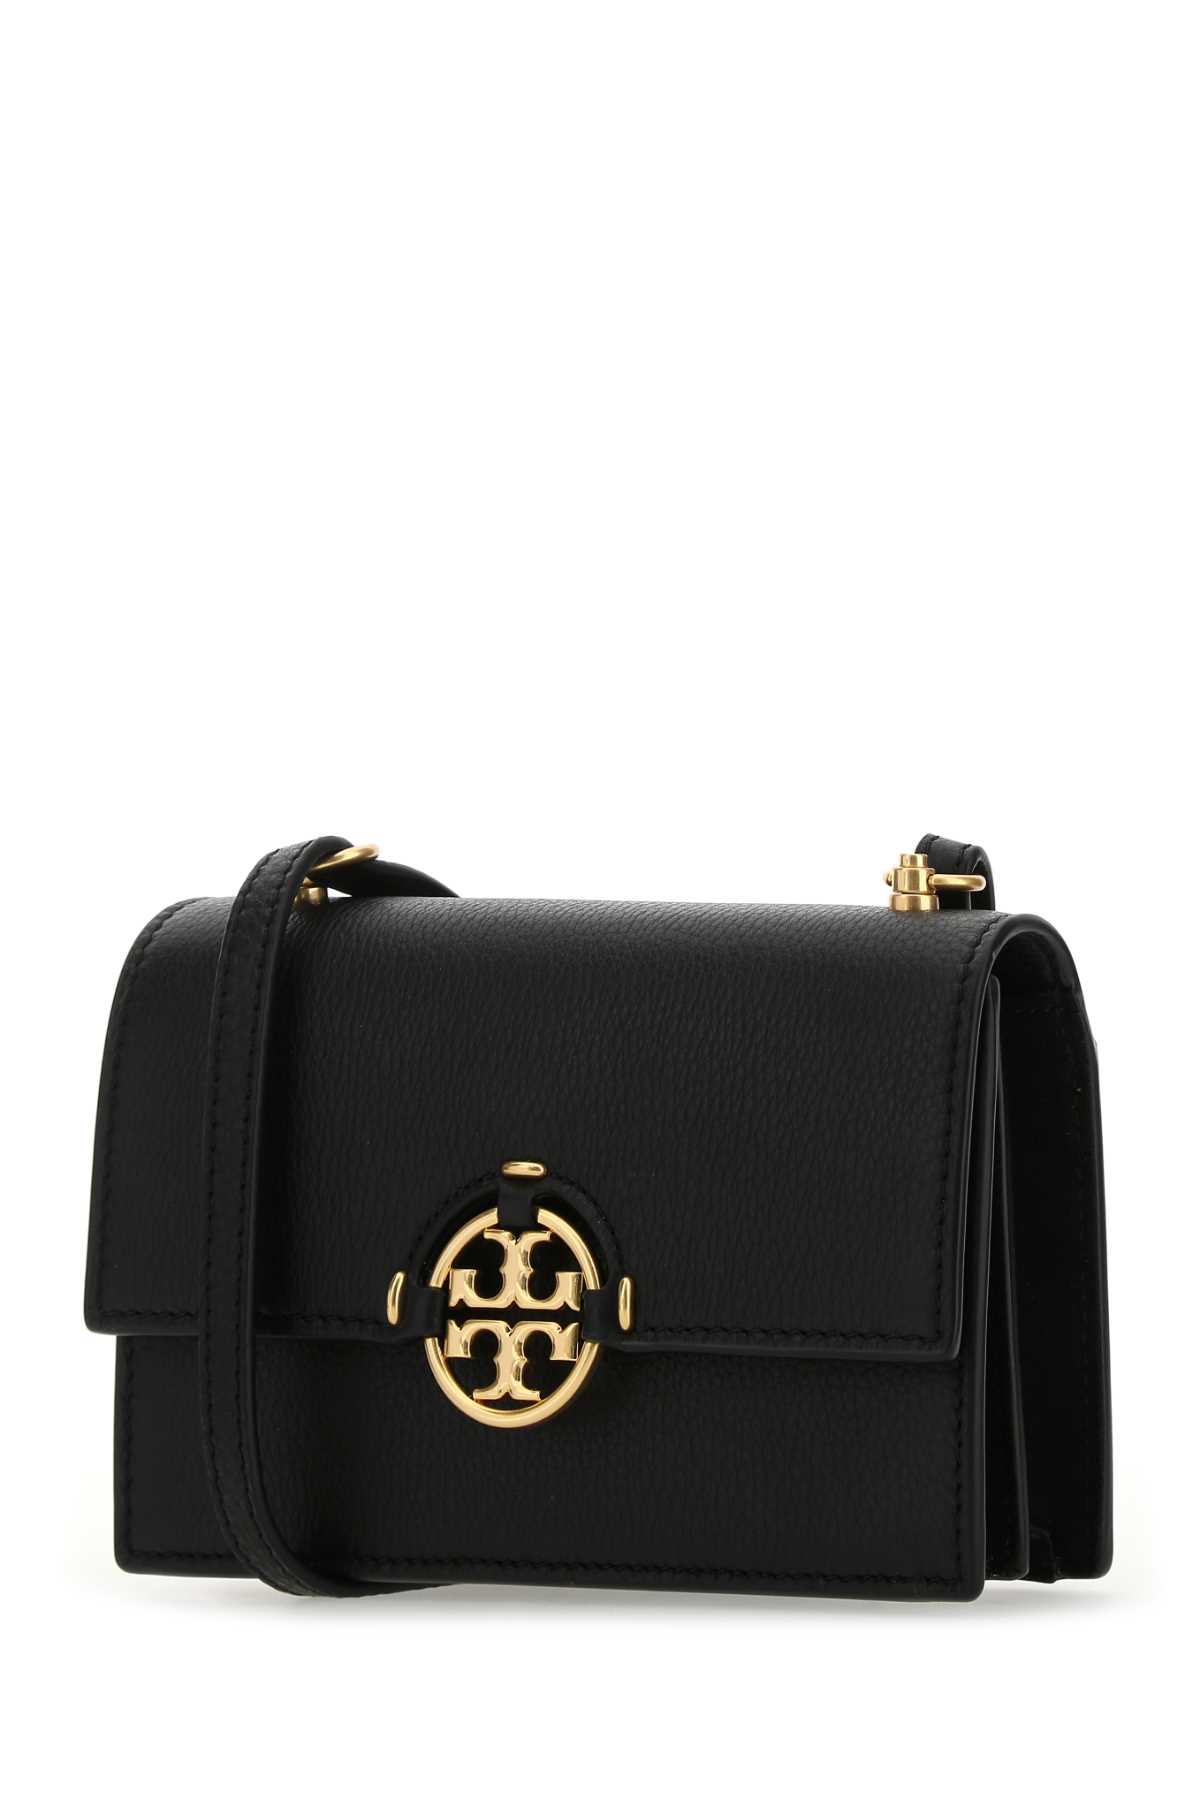 Tory Burch Black Leather Mini Miller Handbag